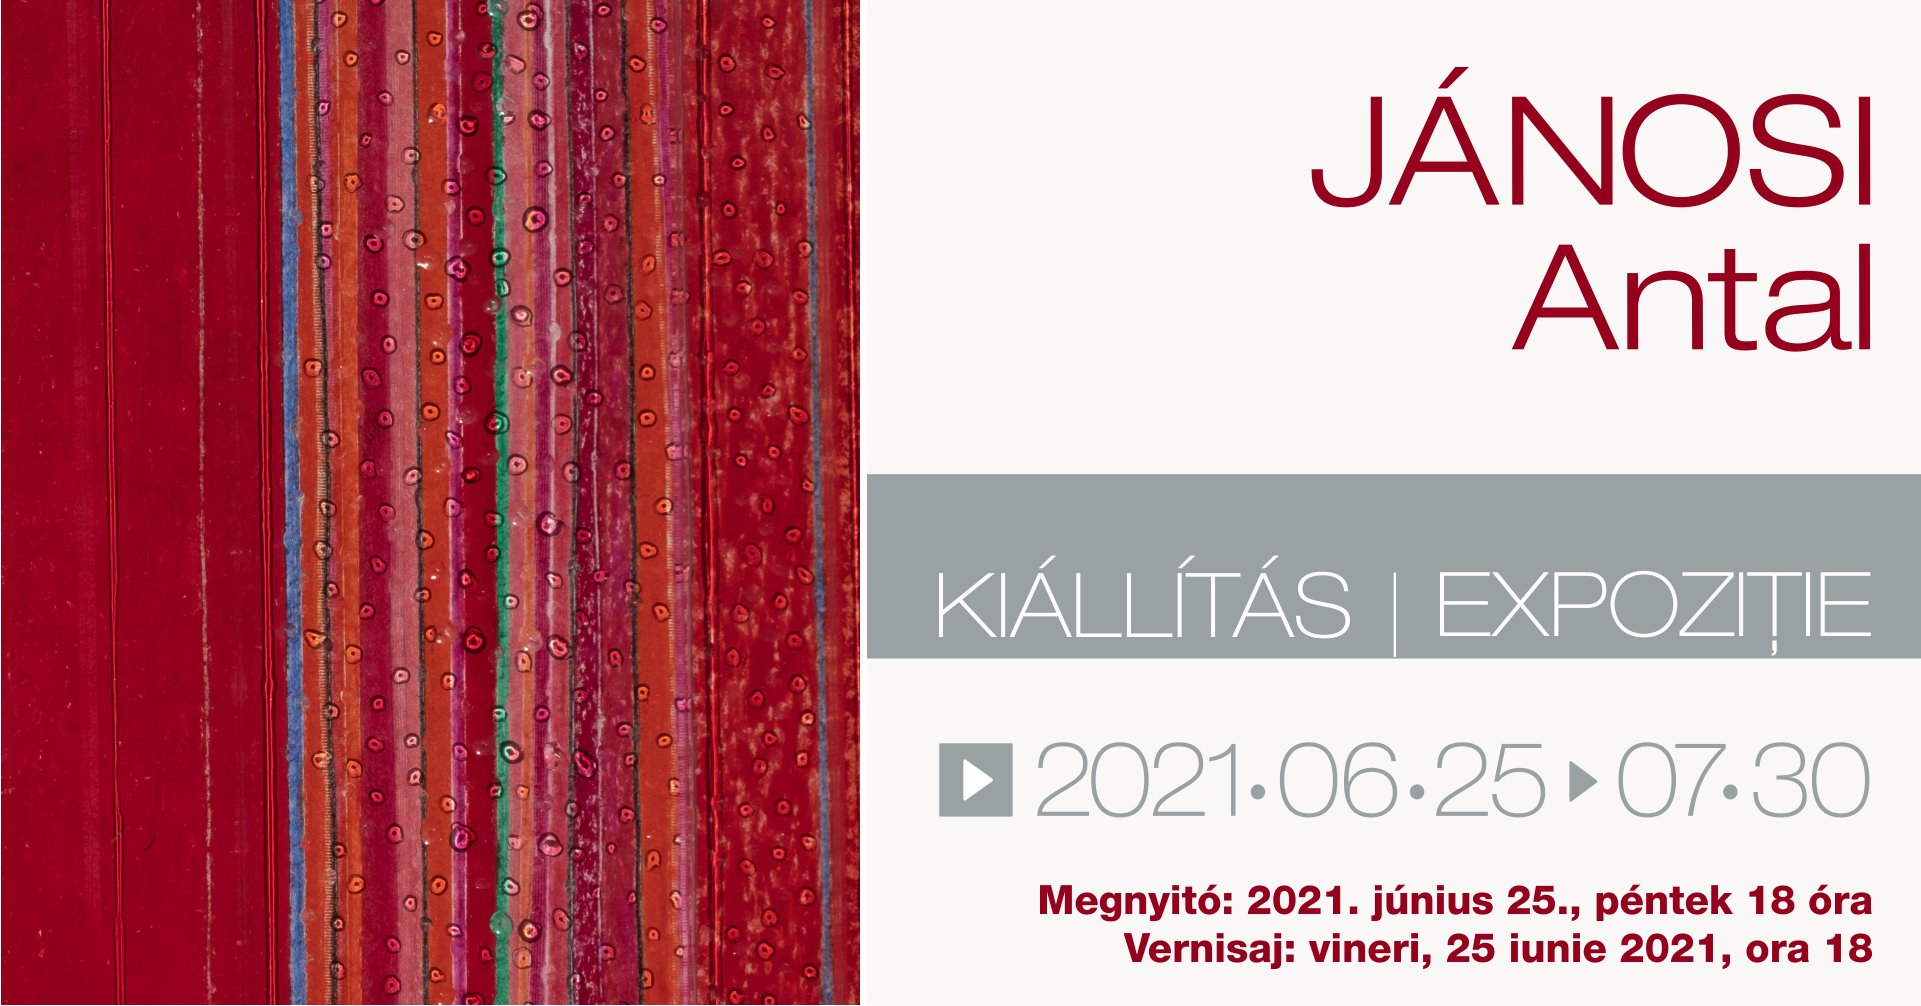 Exhibition of the graphic artist Jánosi Antal 